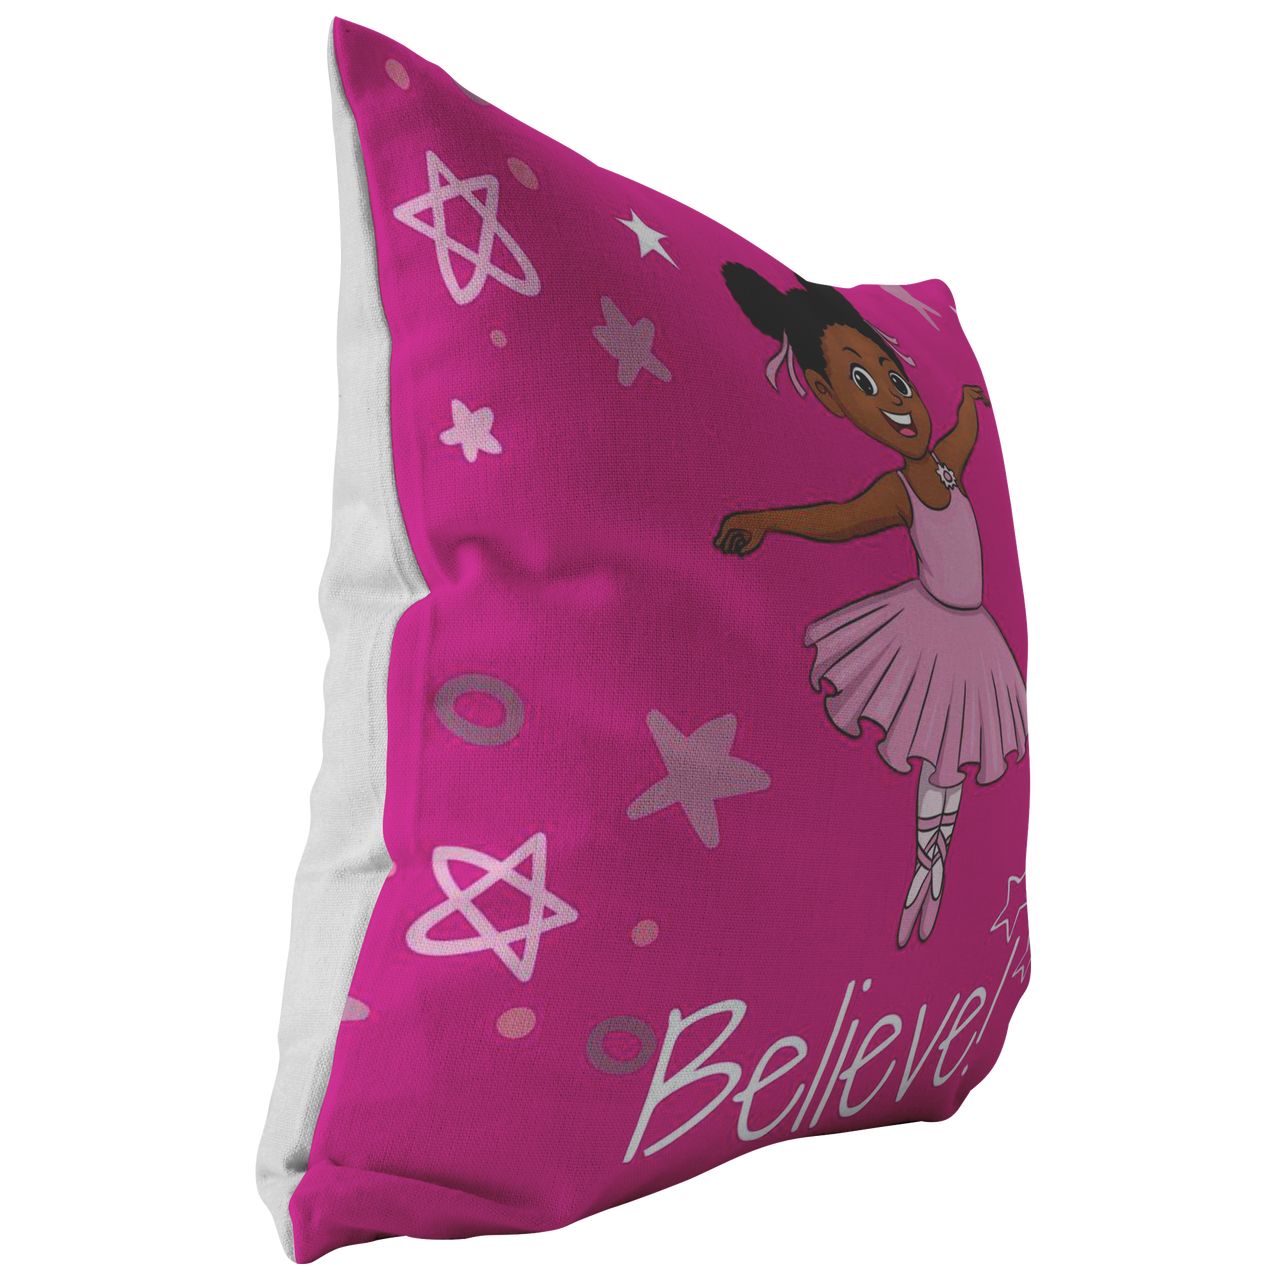 The I Believe Ballerina Throw Pillow